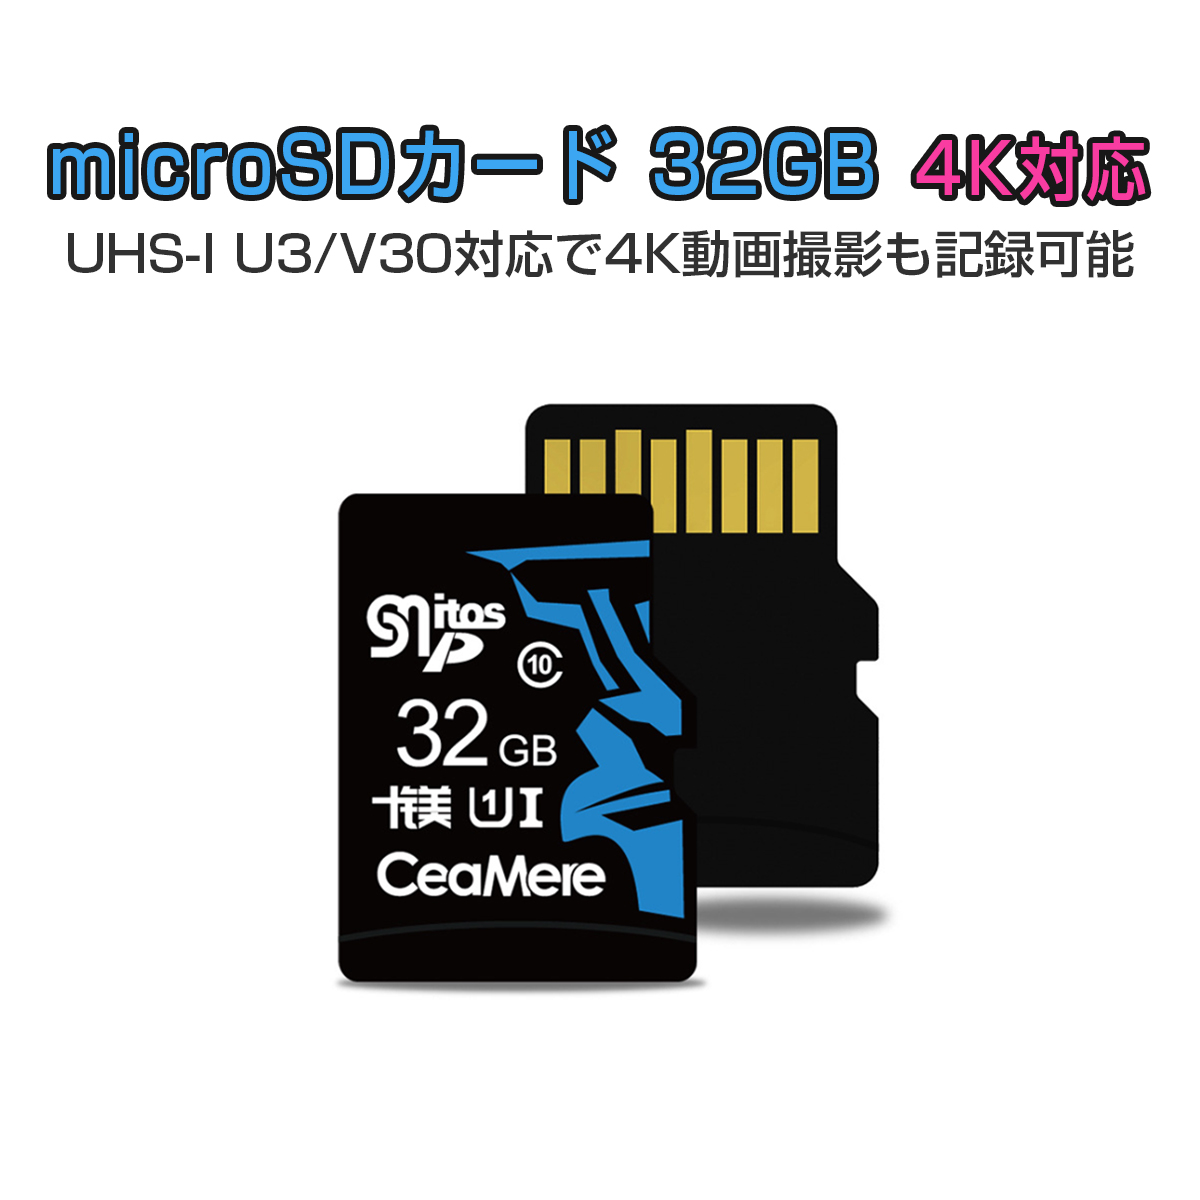 MicroSDカード 32GB UHS-I V30 超高速 最大90MB sec 3D MLC NAND採用 ASチップ 高耐久 MicroSD マイクロSD microSDXC 300x SDカード変換アダプタ USBカードリーダー付き 6ヶ月保証